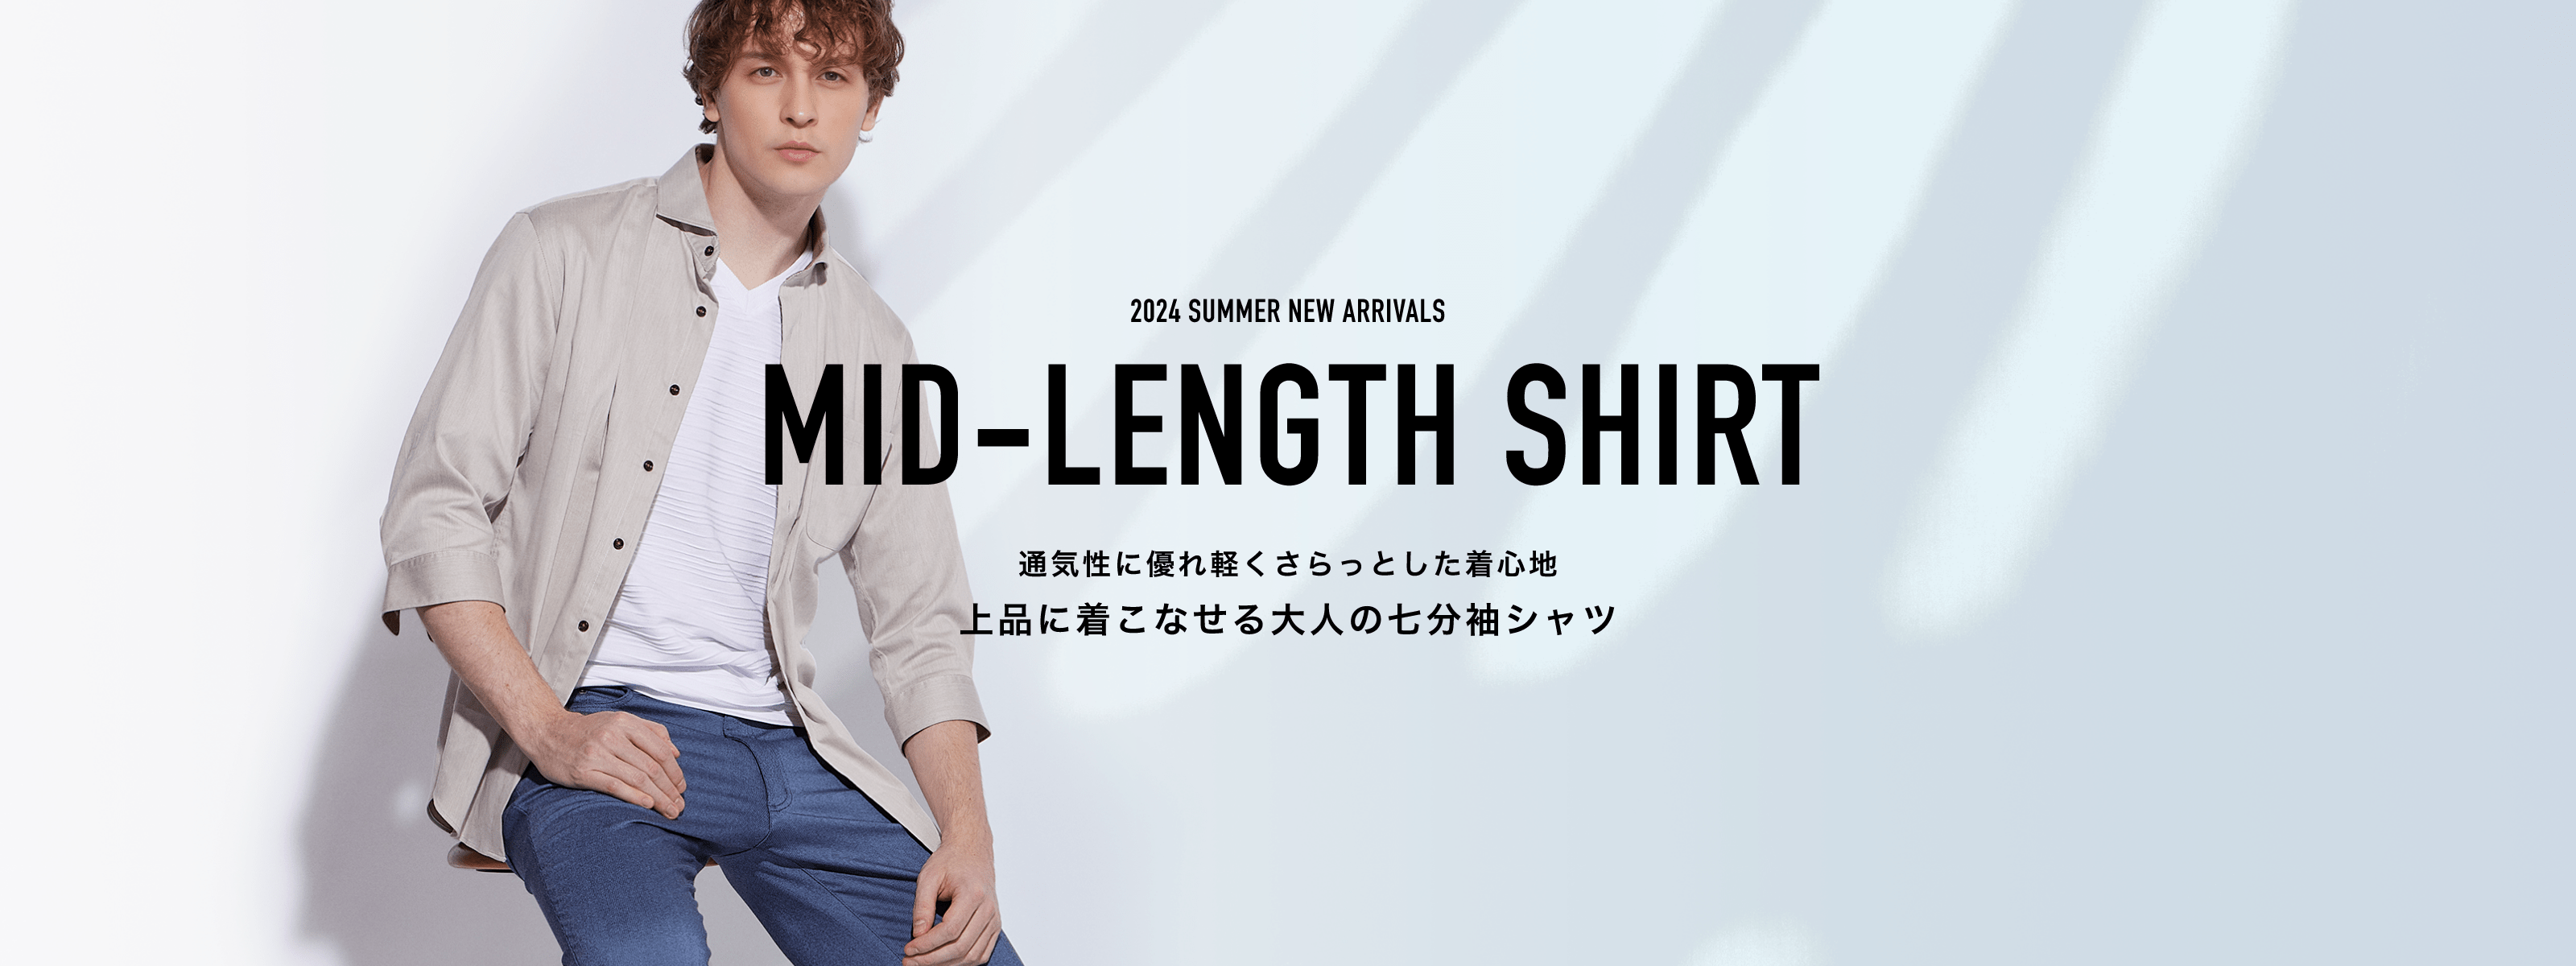 MID-LENGTH SHIRT 通気性に優れ軽くさらっとした着心地　上品に着こなせる大人の七分袖シャツ